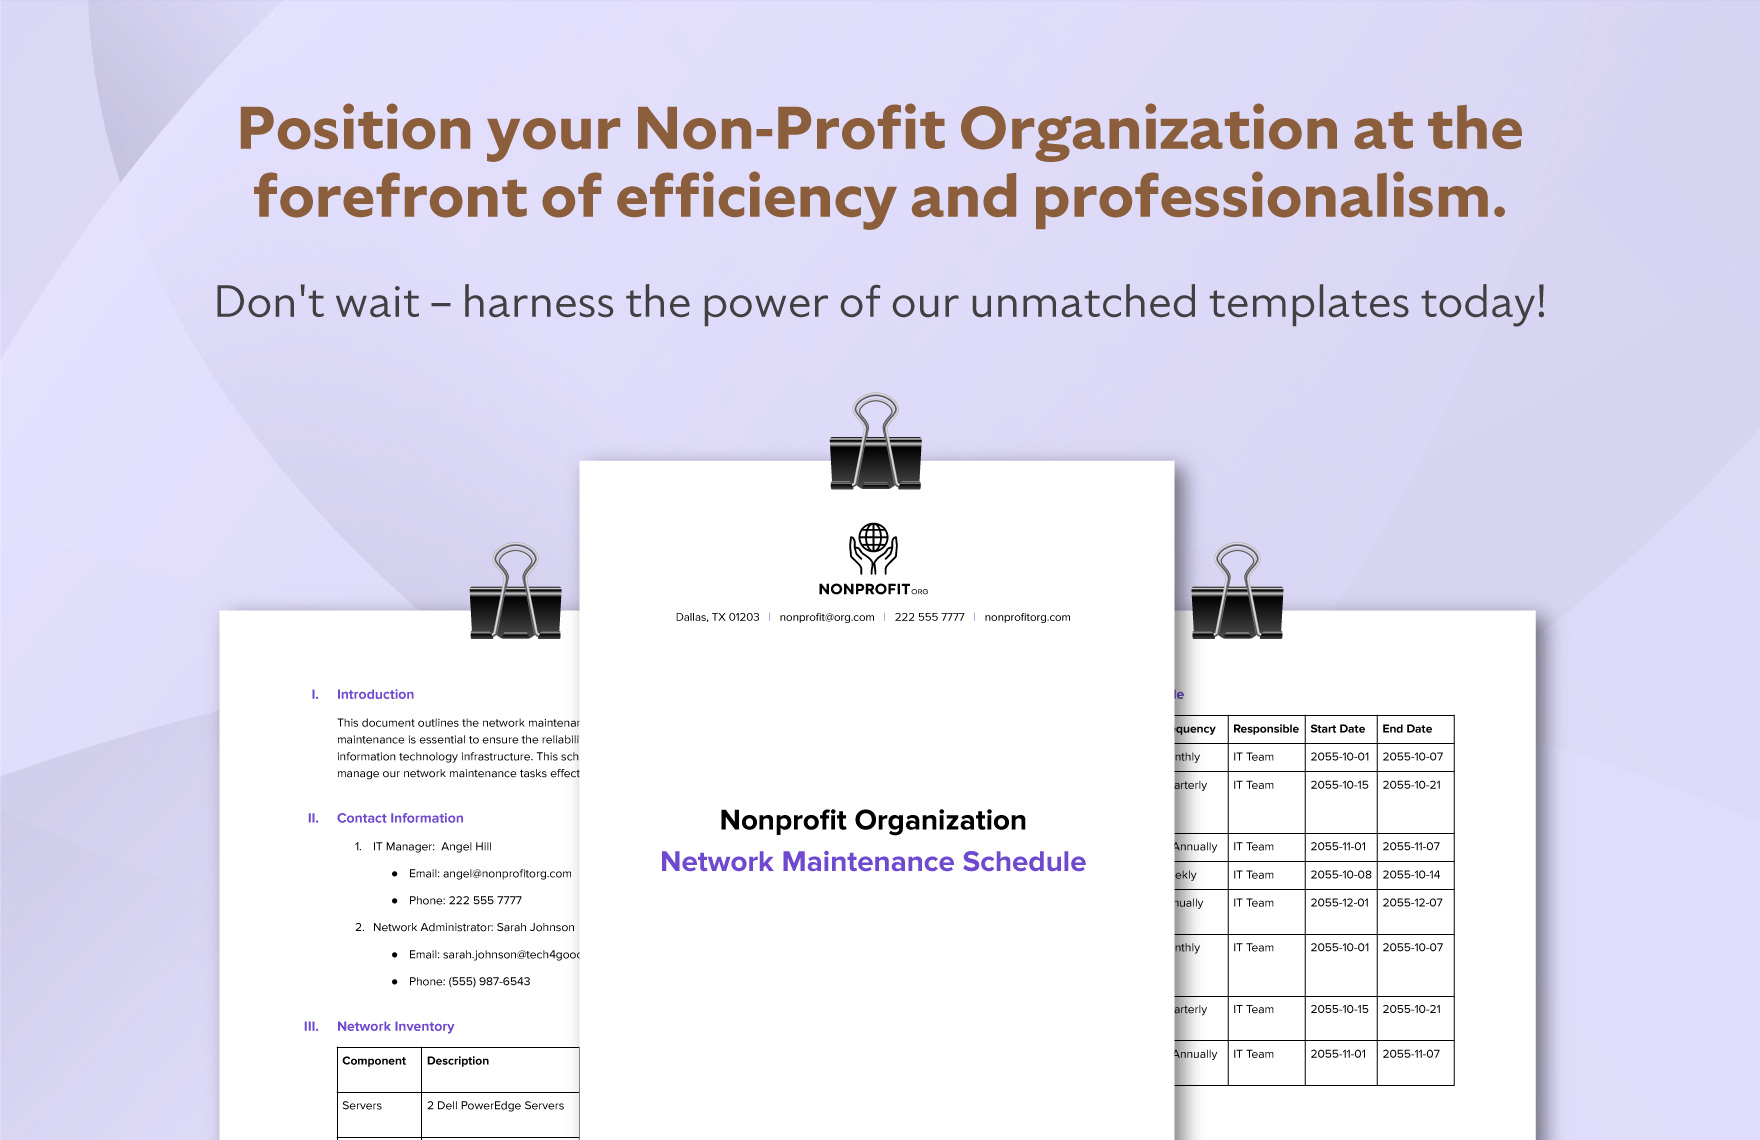 Nonprofit Organization Network Maintenance Schedule Template